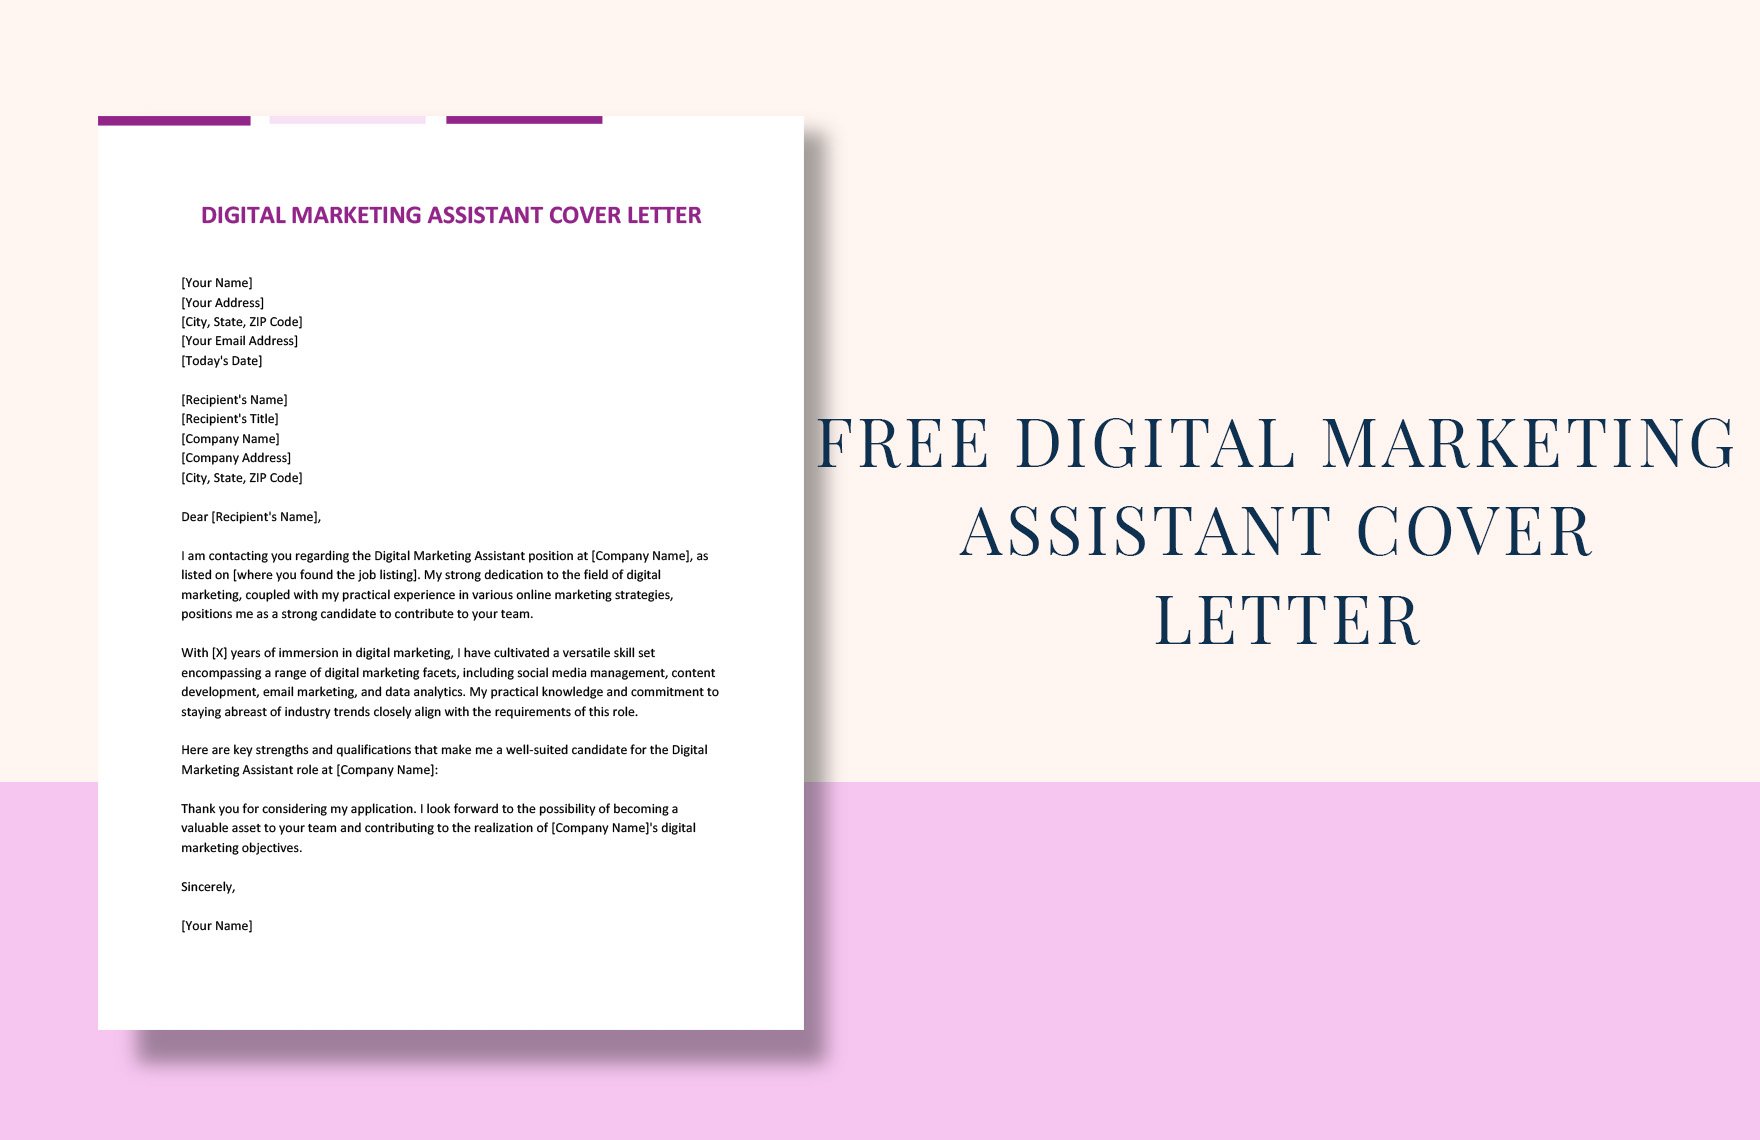 Digital Marketing Assistant Cover Letter in Word, Google Docs